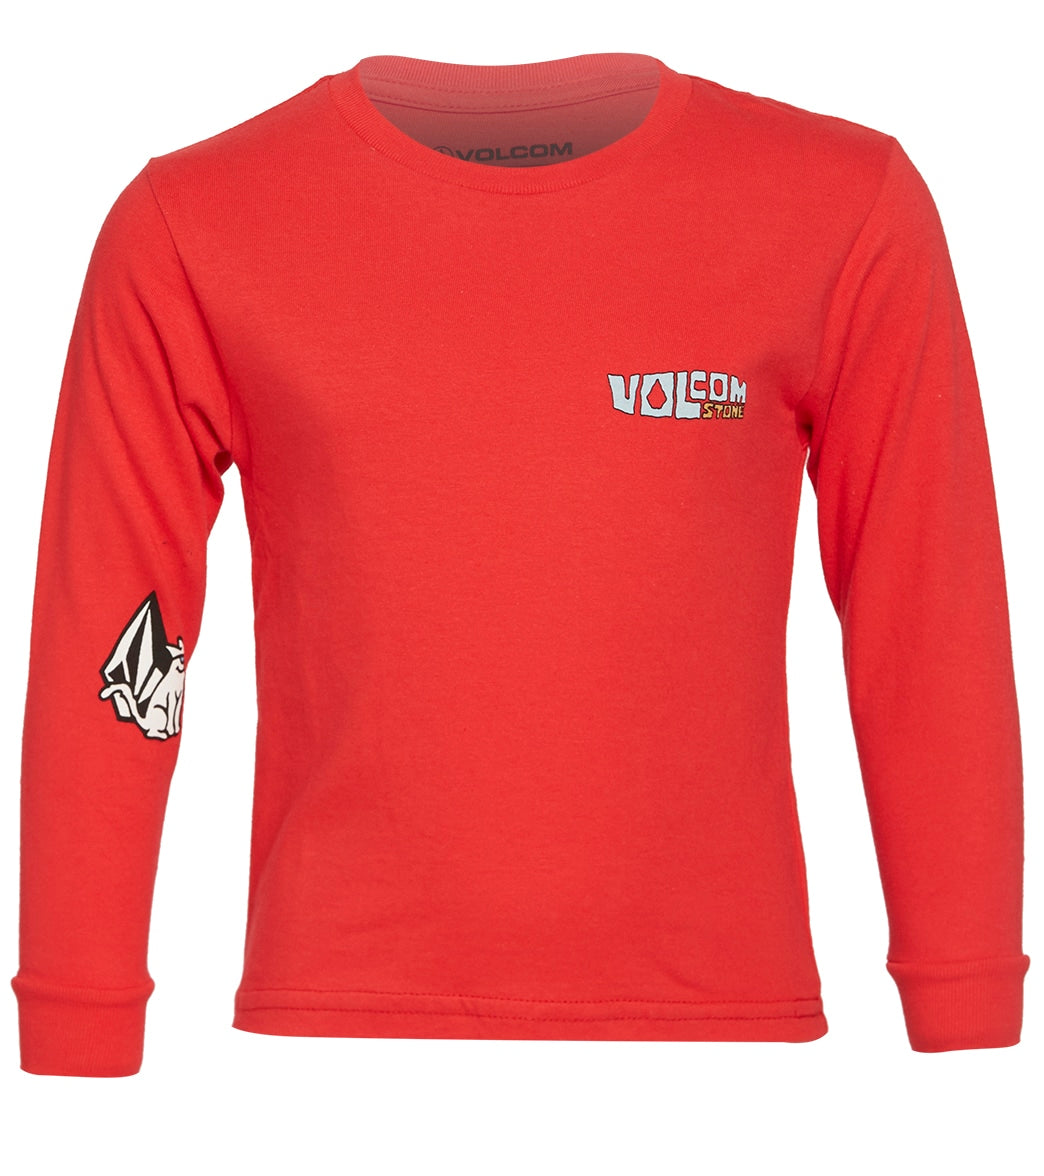 Volcom Boys' Catback Long Sleeve Shirt - Fiery Red 4T Cotton - Swimoutlet.com